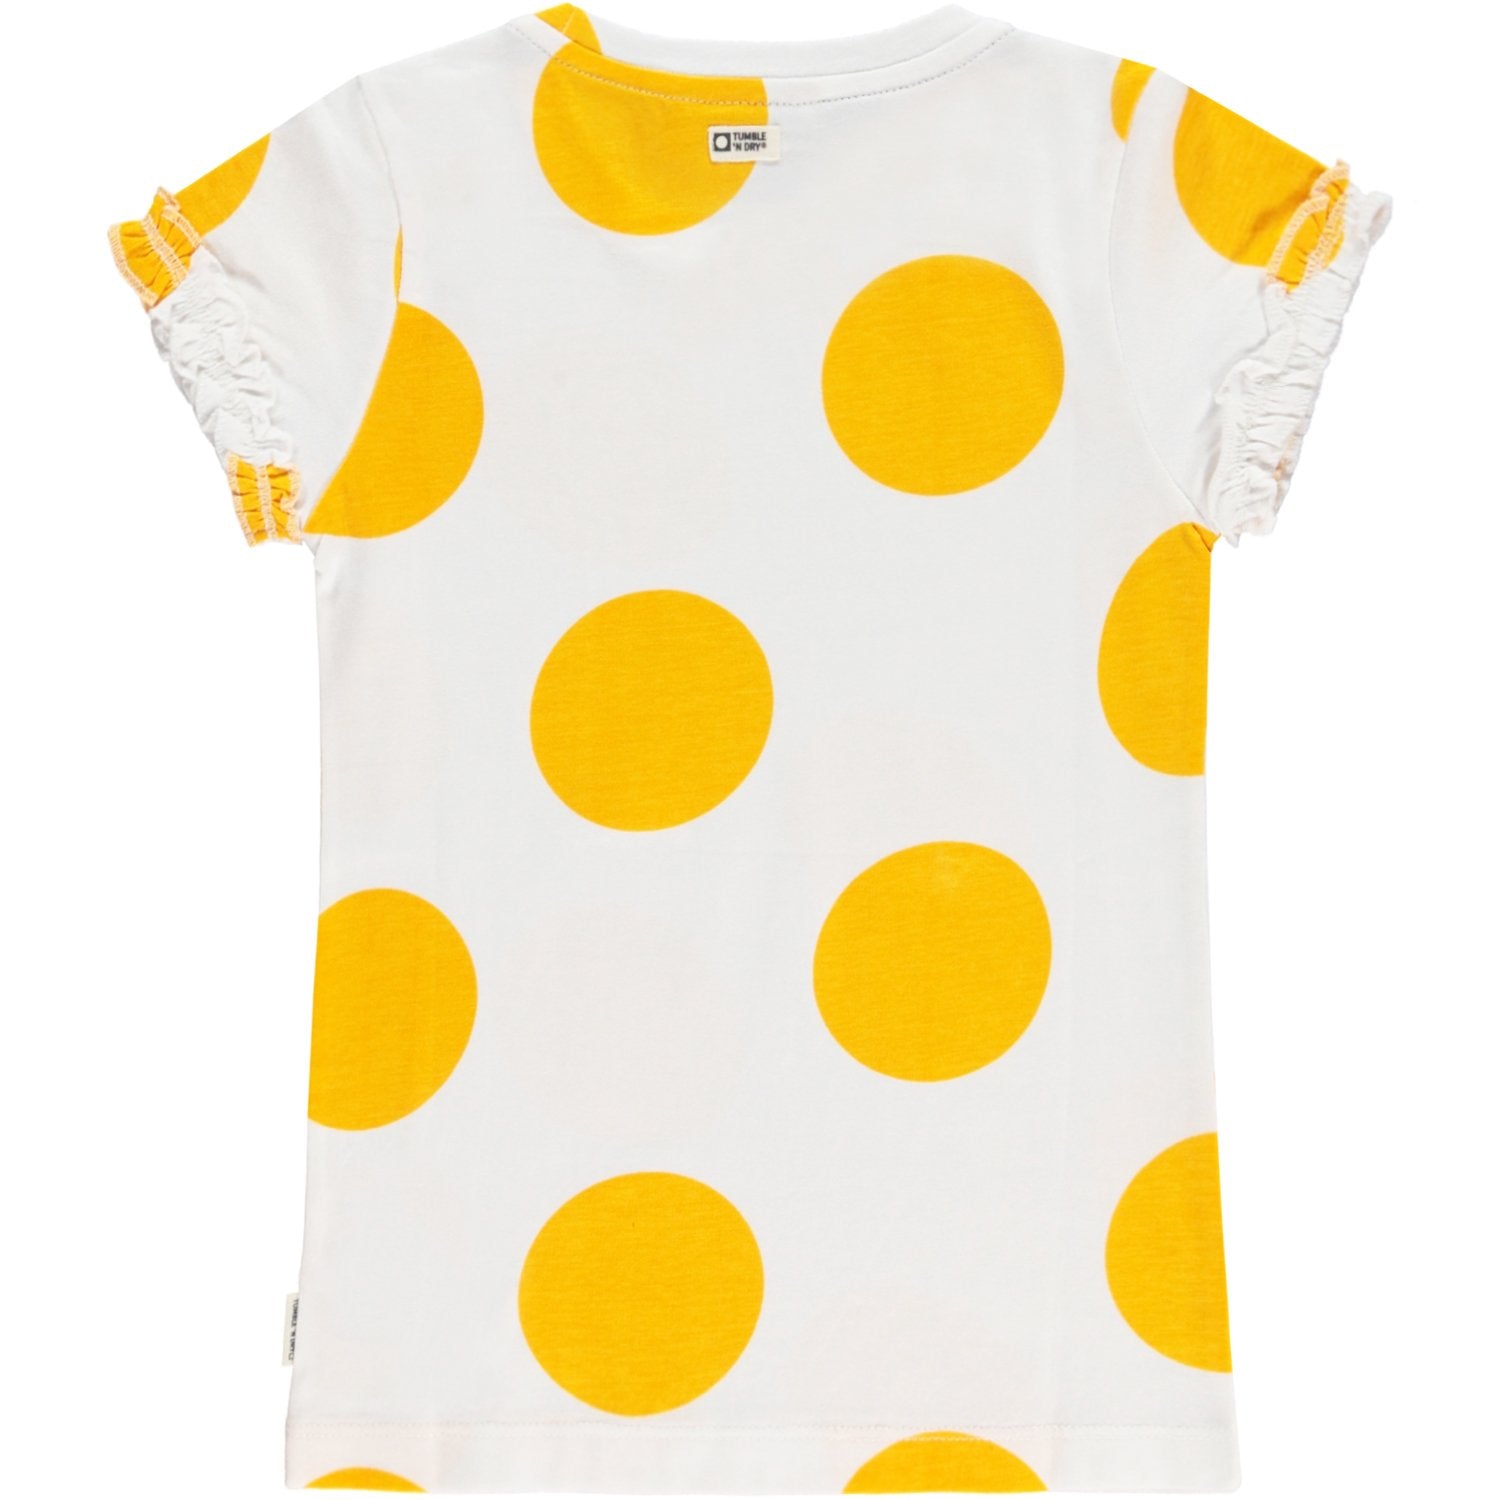 Meisjes T-shirt Km O-hals van Tumble 'n Dry in de kleur Paper white in maat 134/140.